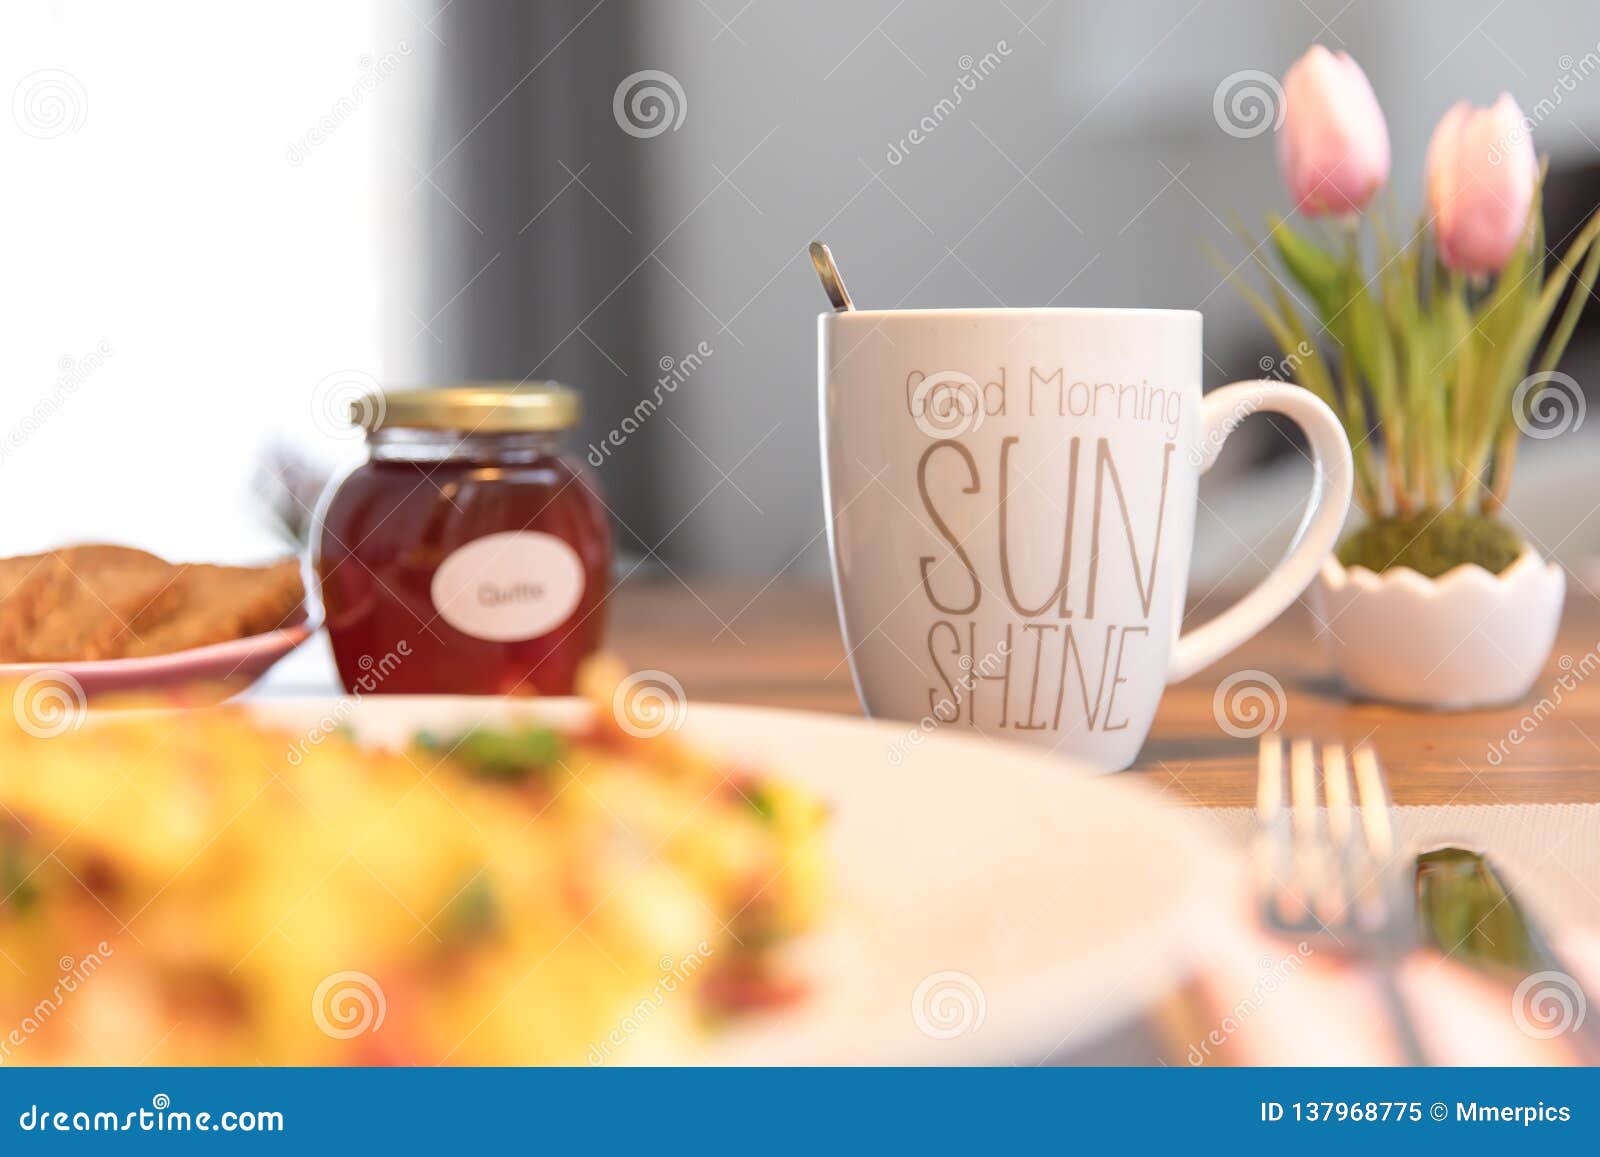 Good Morning Sunshine Breakfast at the Morning Stock Image - Image ...